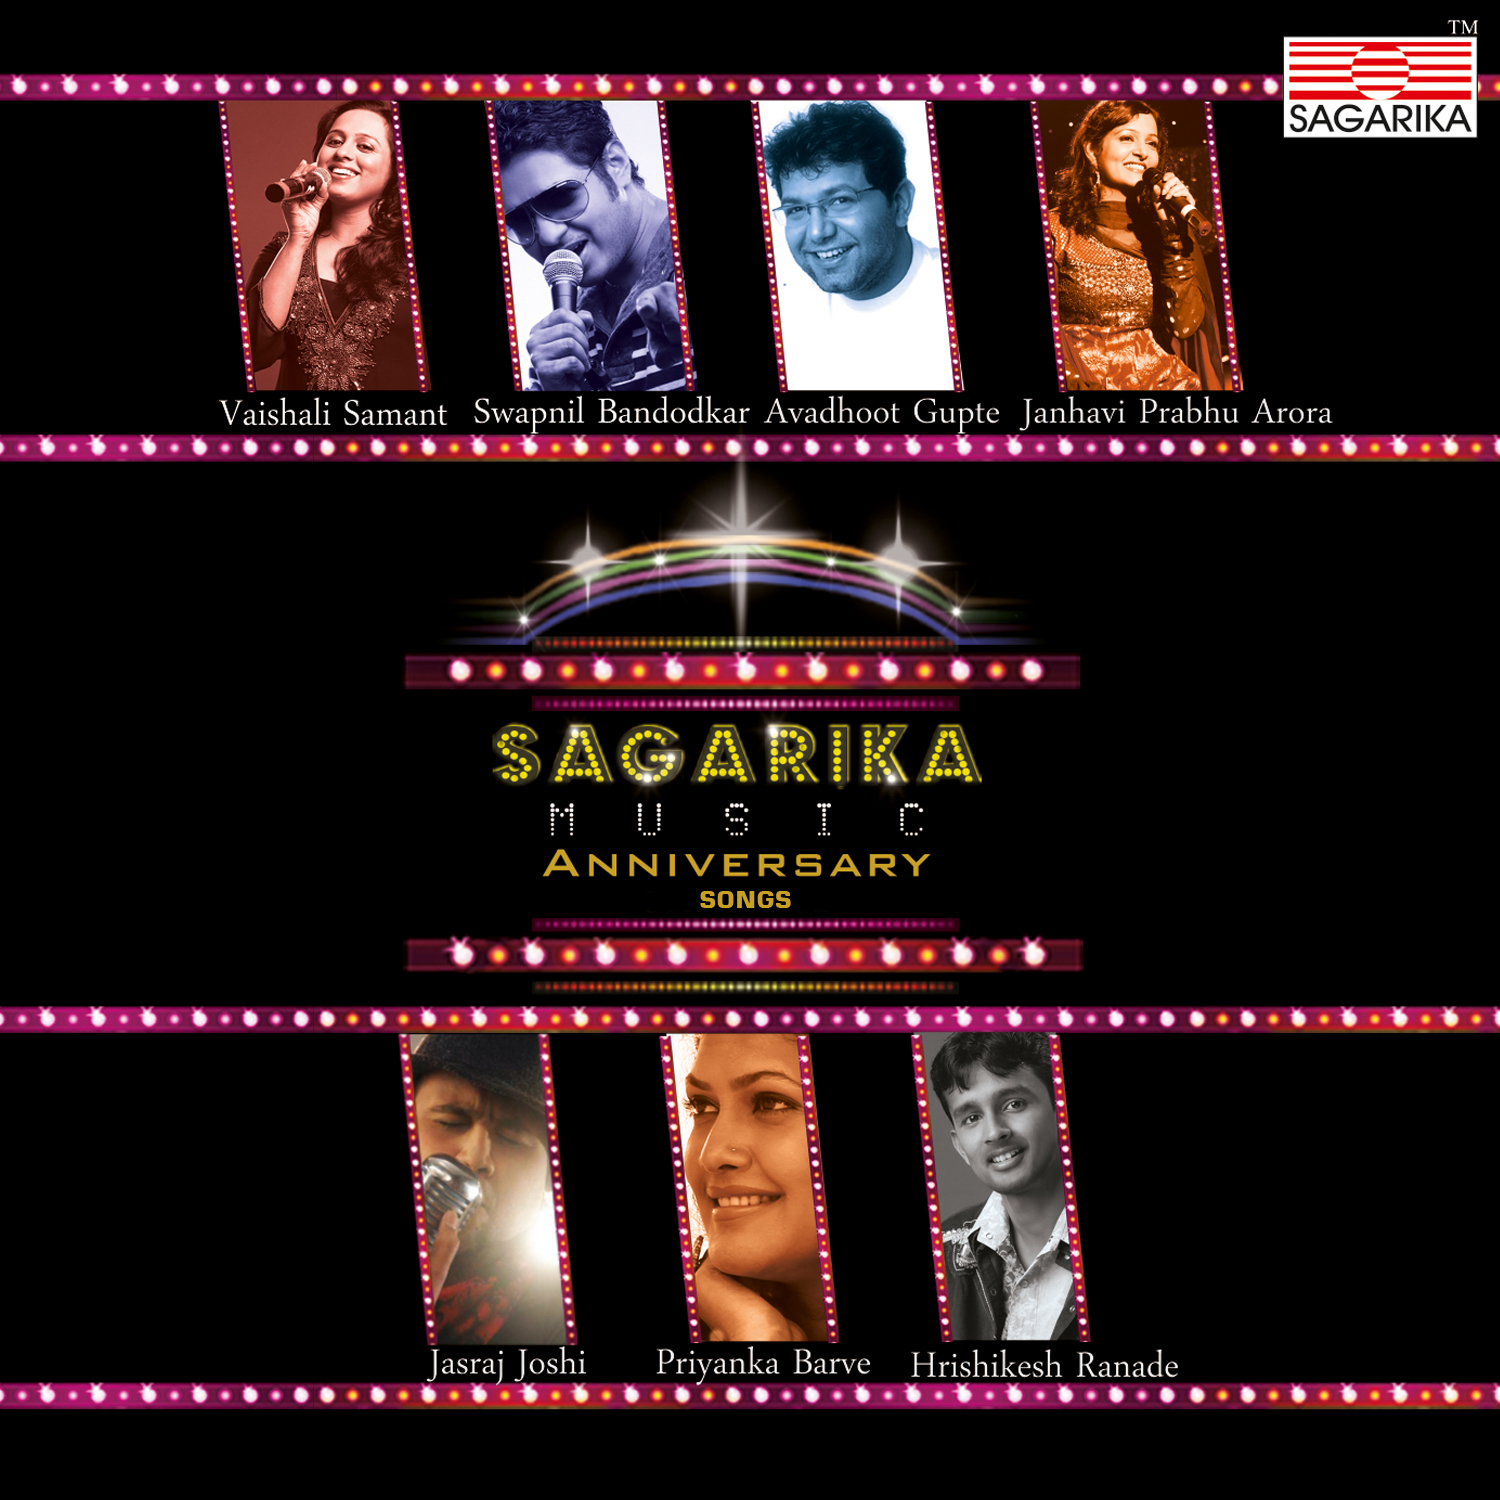 Sagarika Anniversay Album